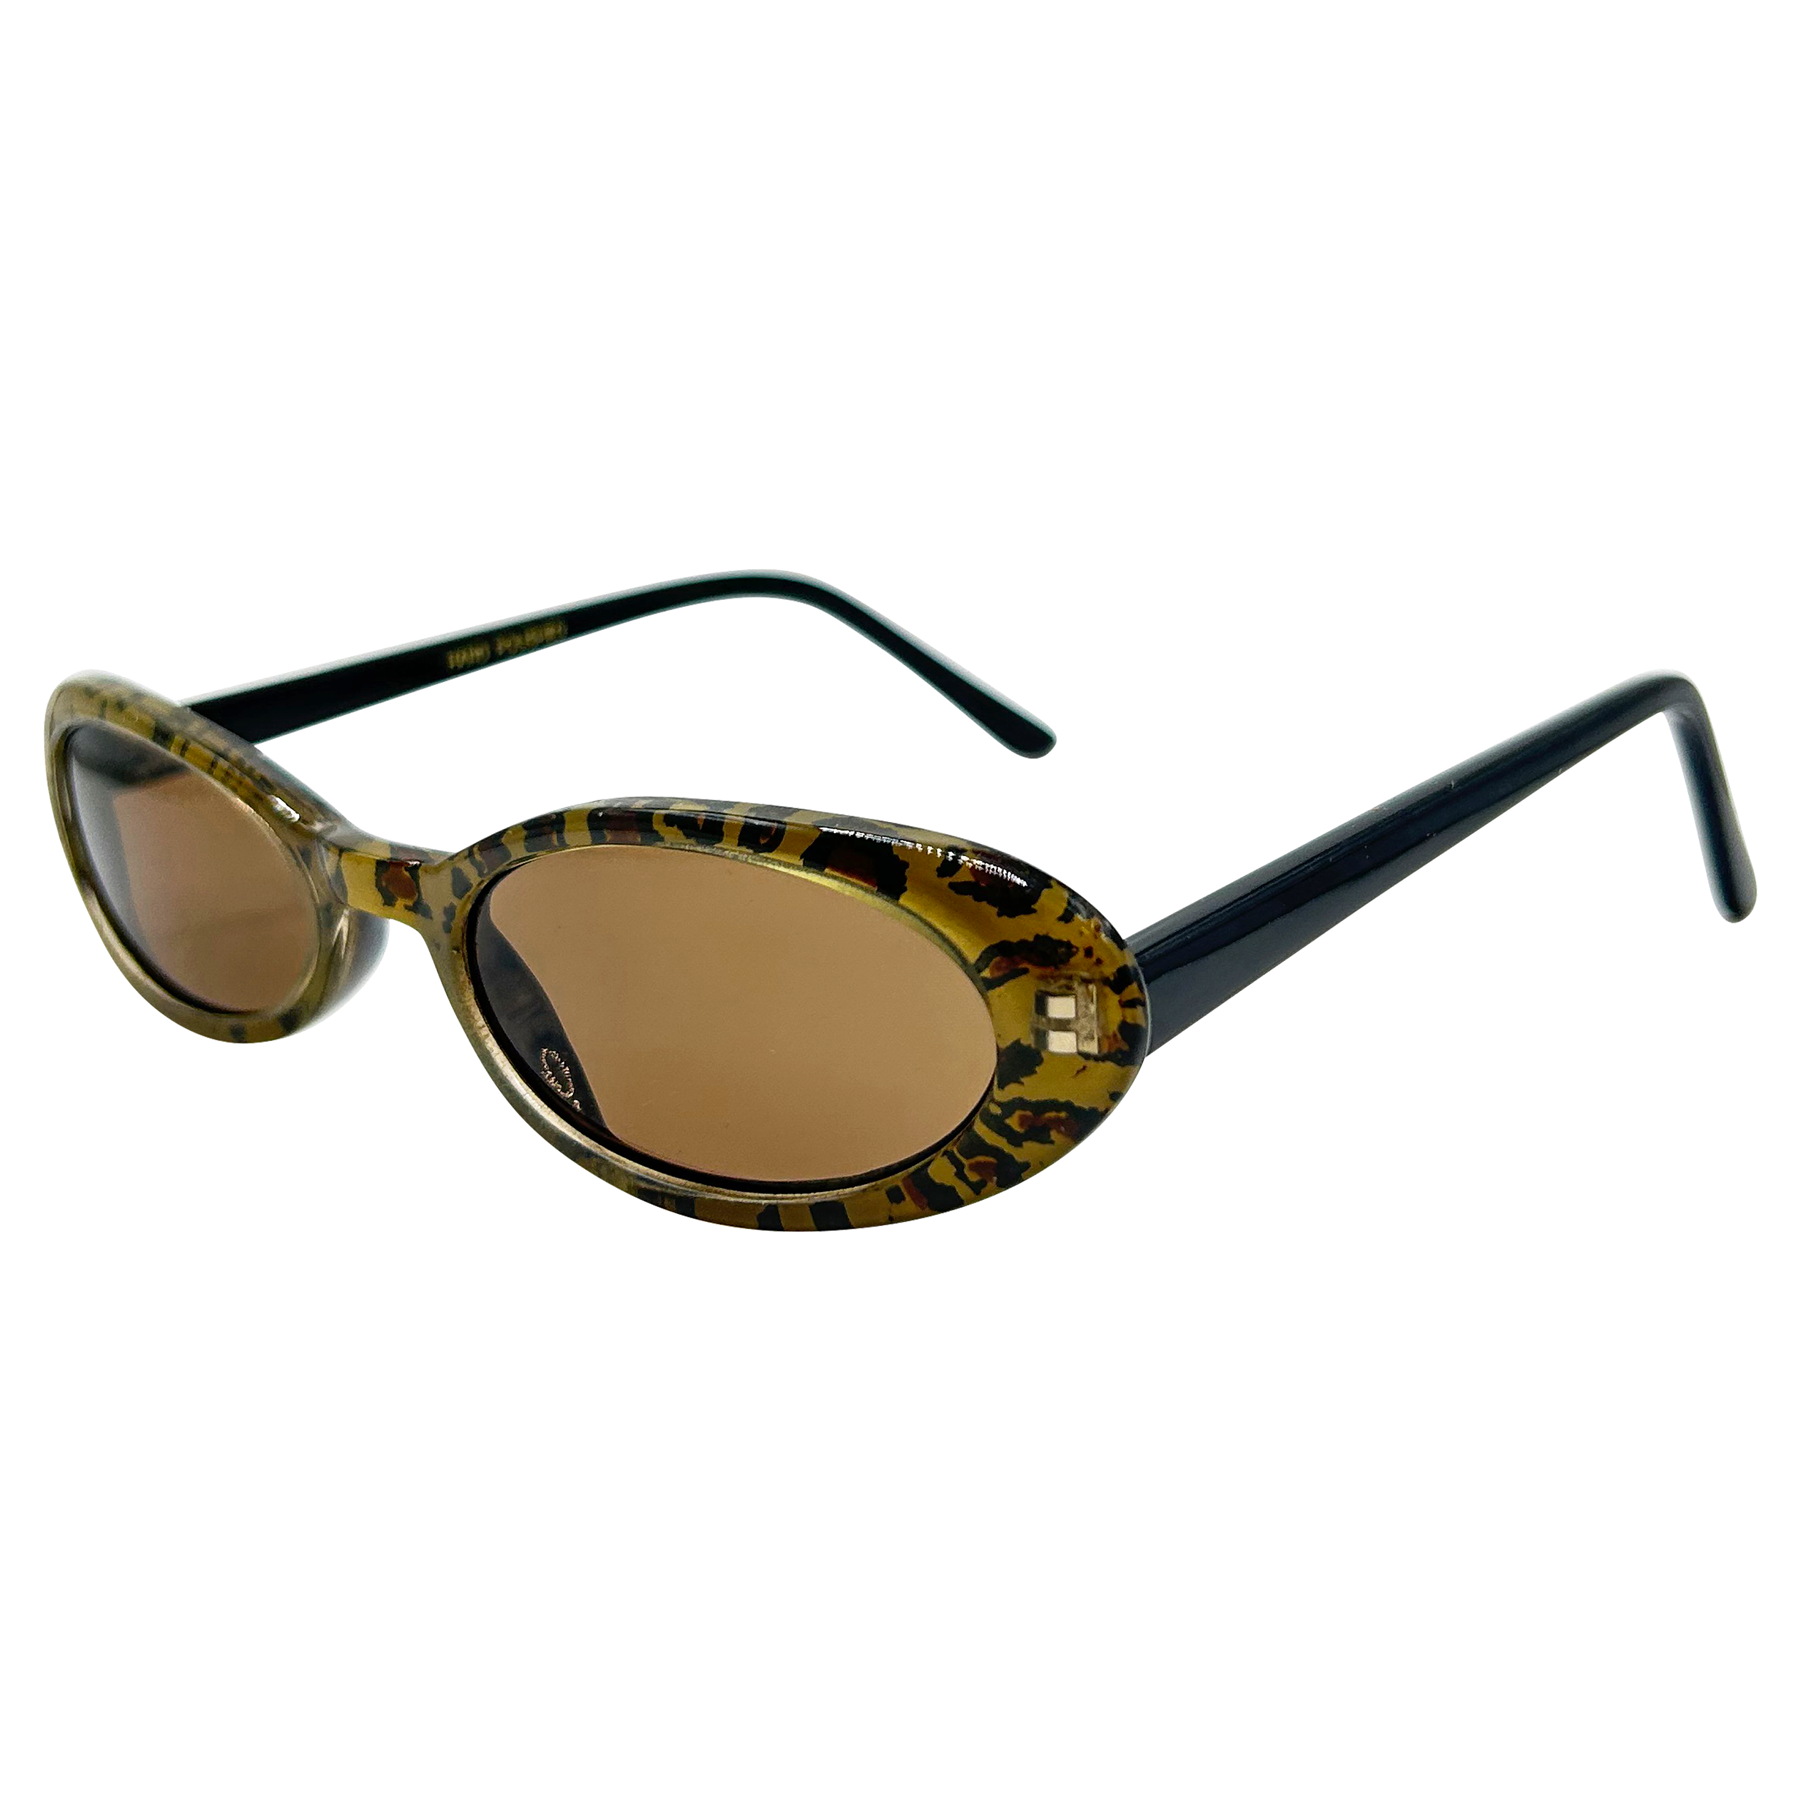 PANTHERESS Oval Panther-Print 90s Sunglasses